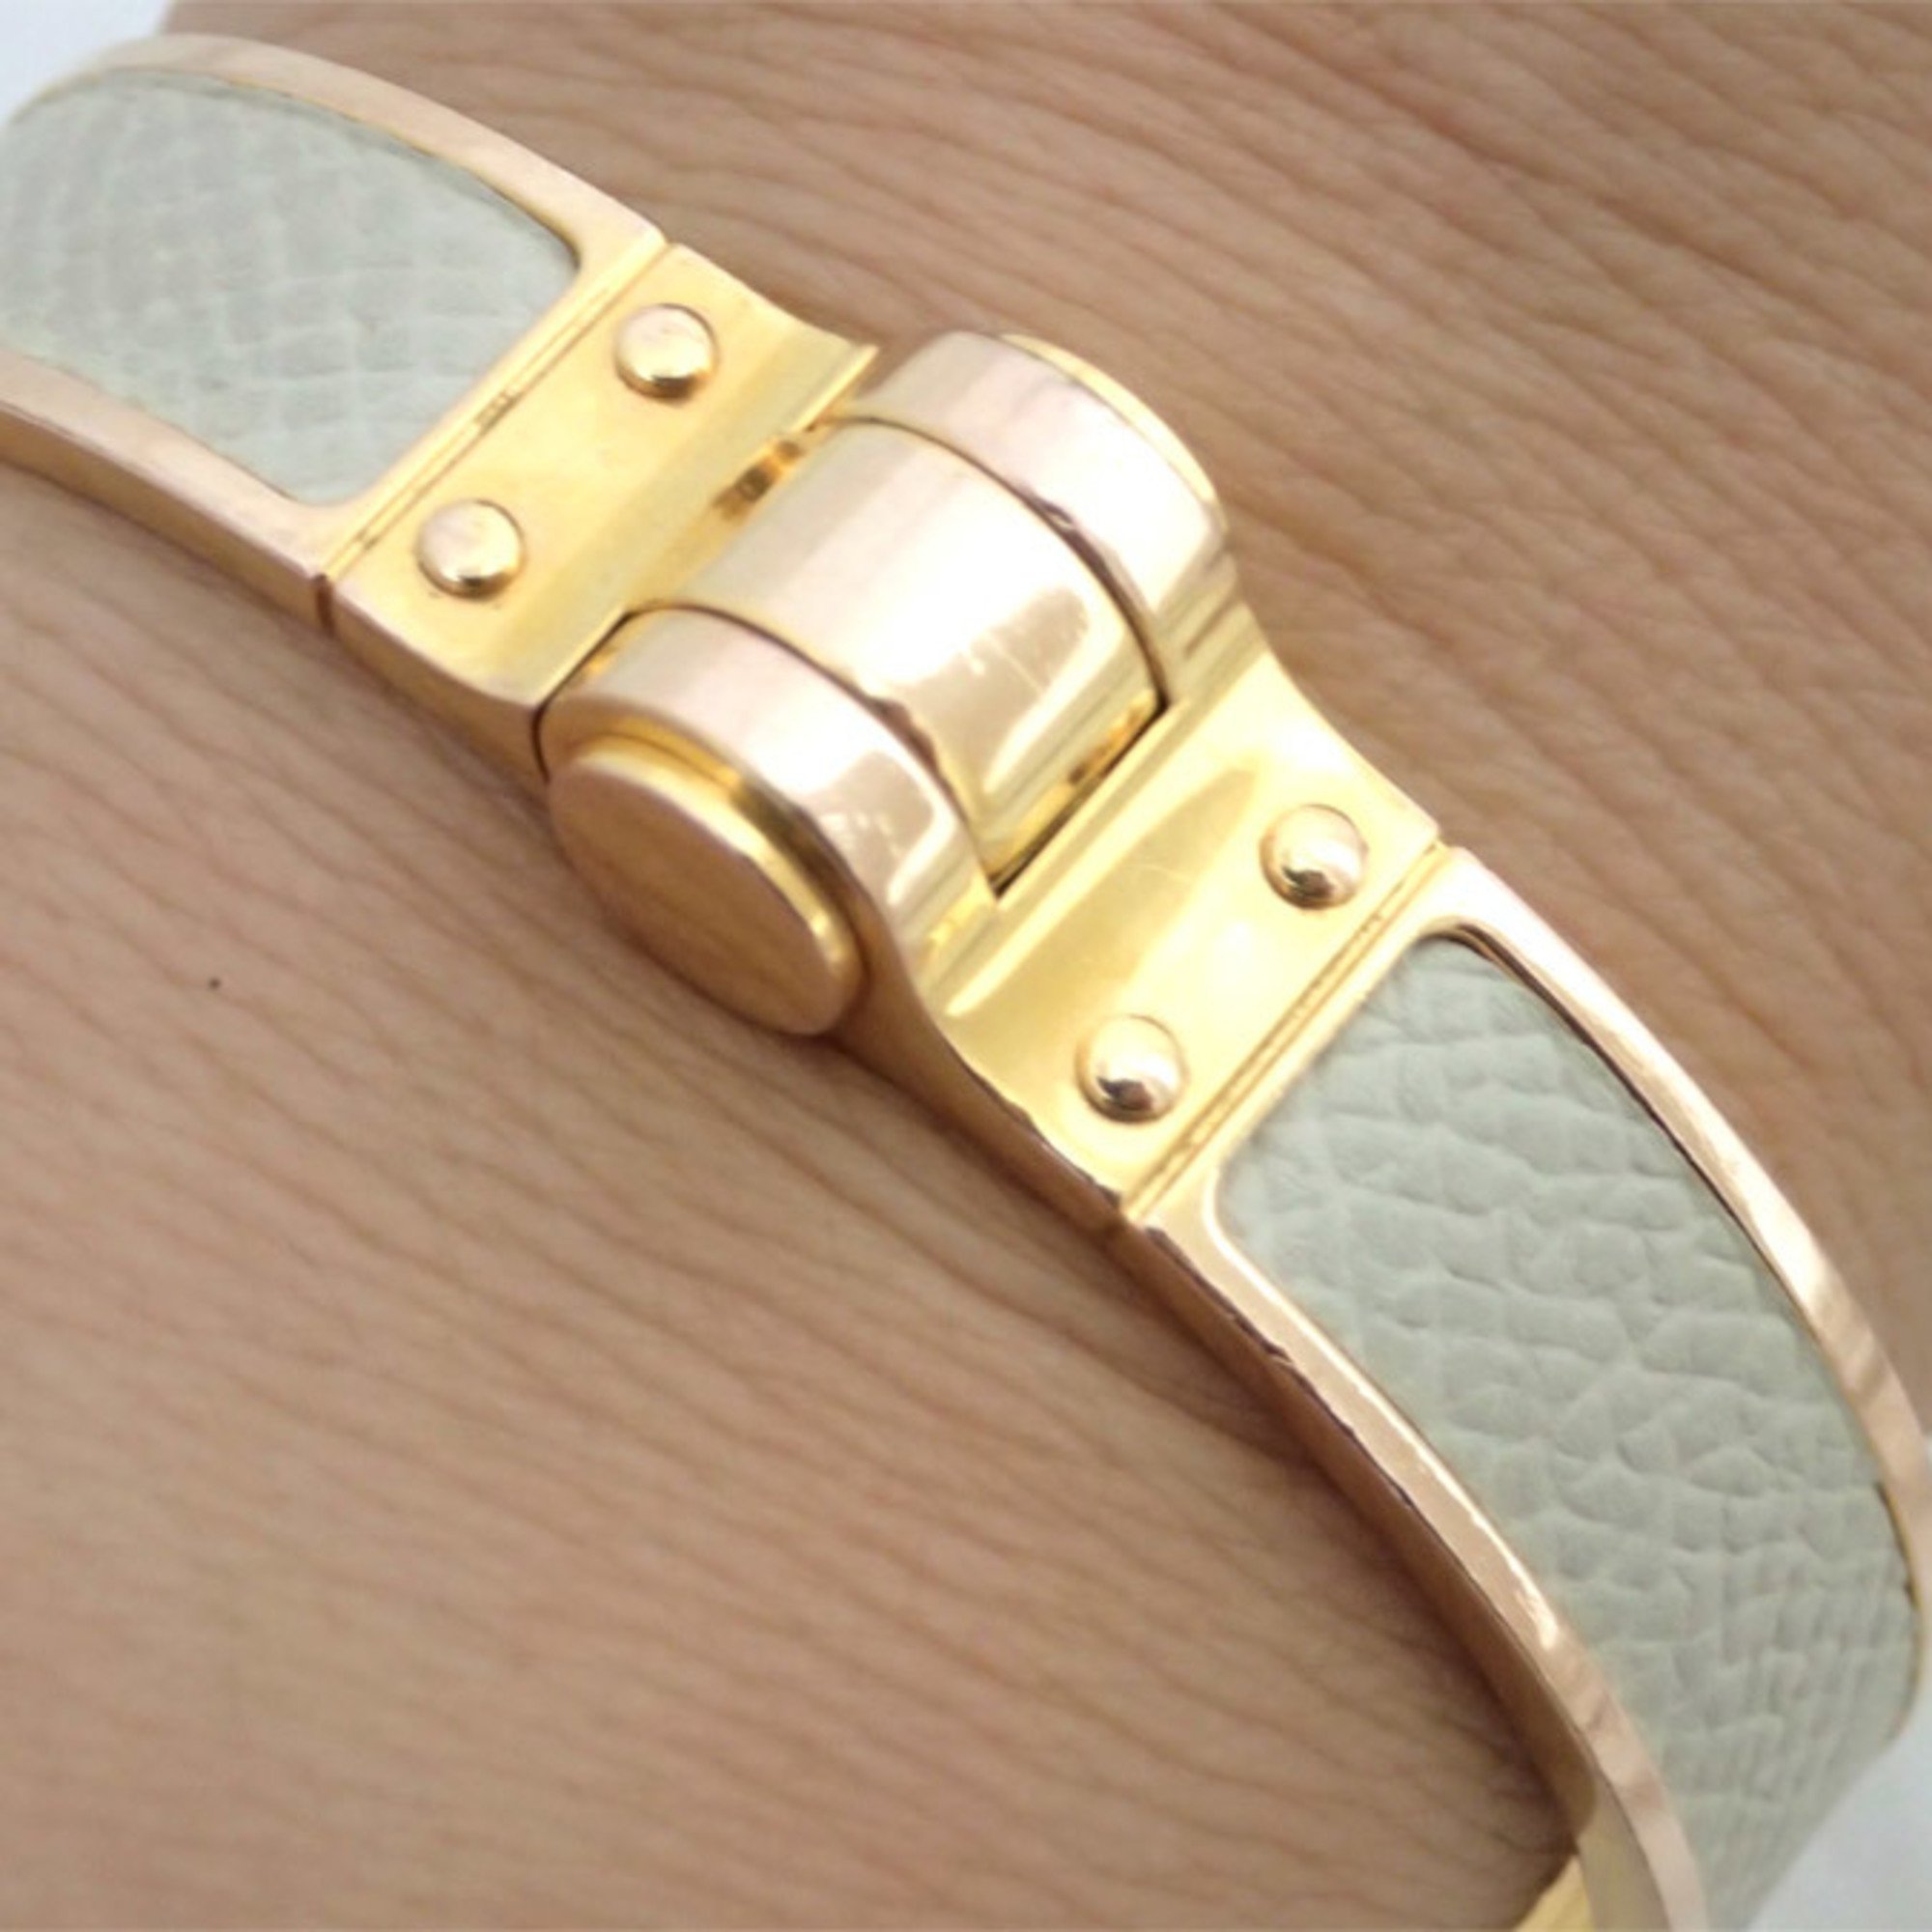 Hermes HERMES Bangle Charnière Gold x Off-White Metal Material Leather Bracelet Women's